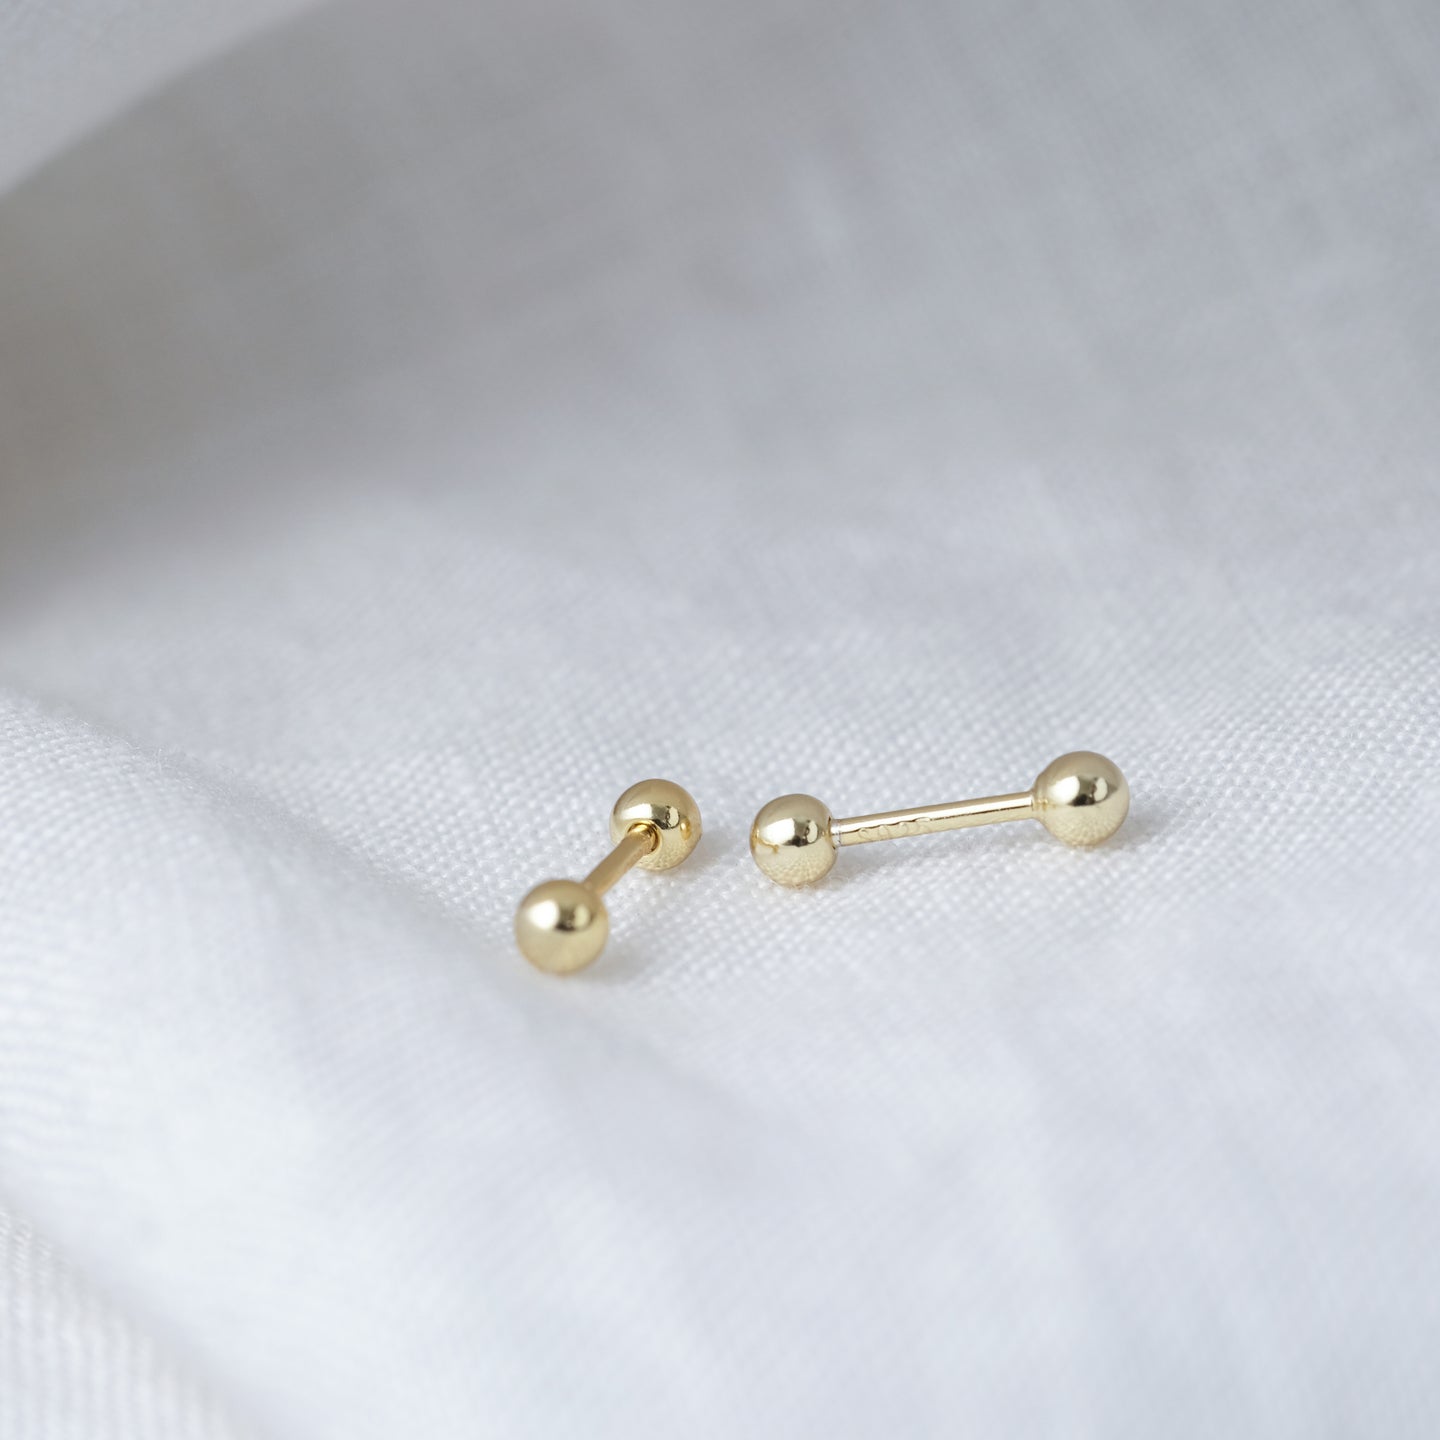 files/hola-teeny-tiny-stud-earrings-18k-gold-vermeil-1.jpg